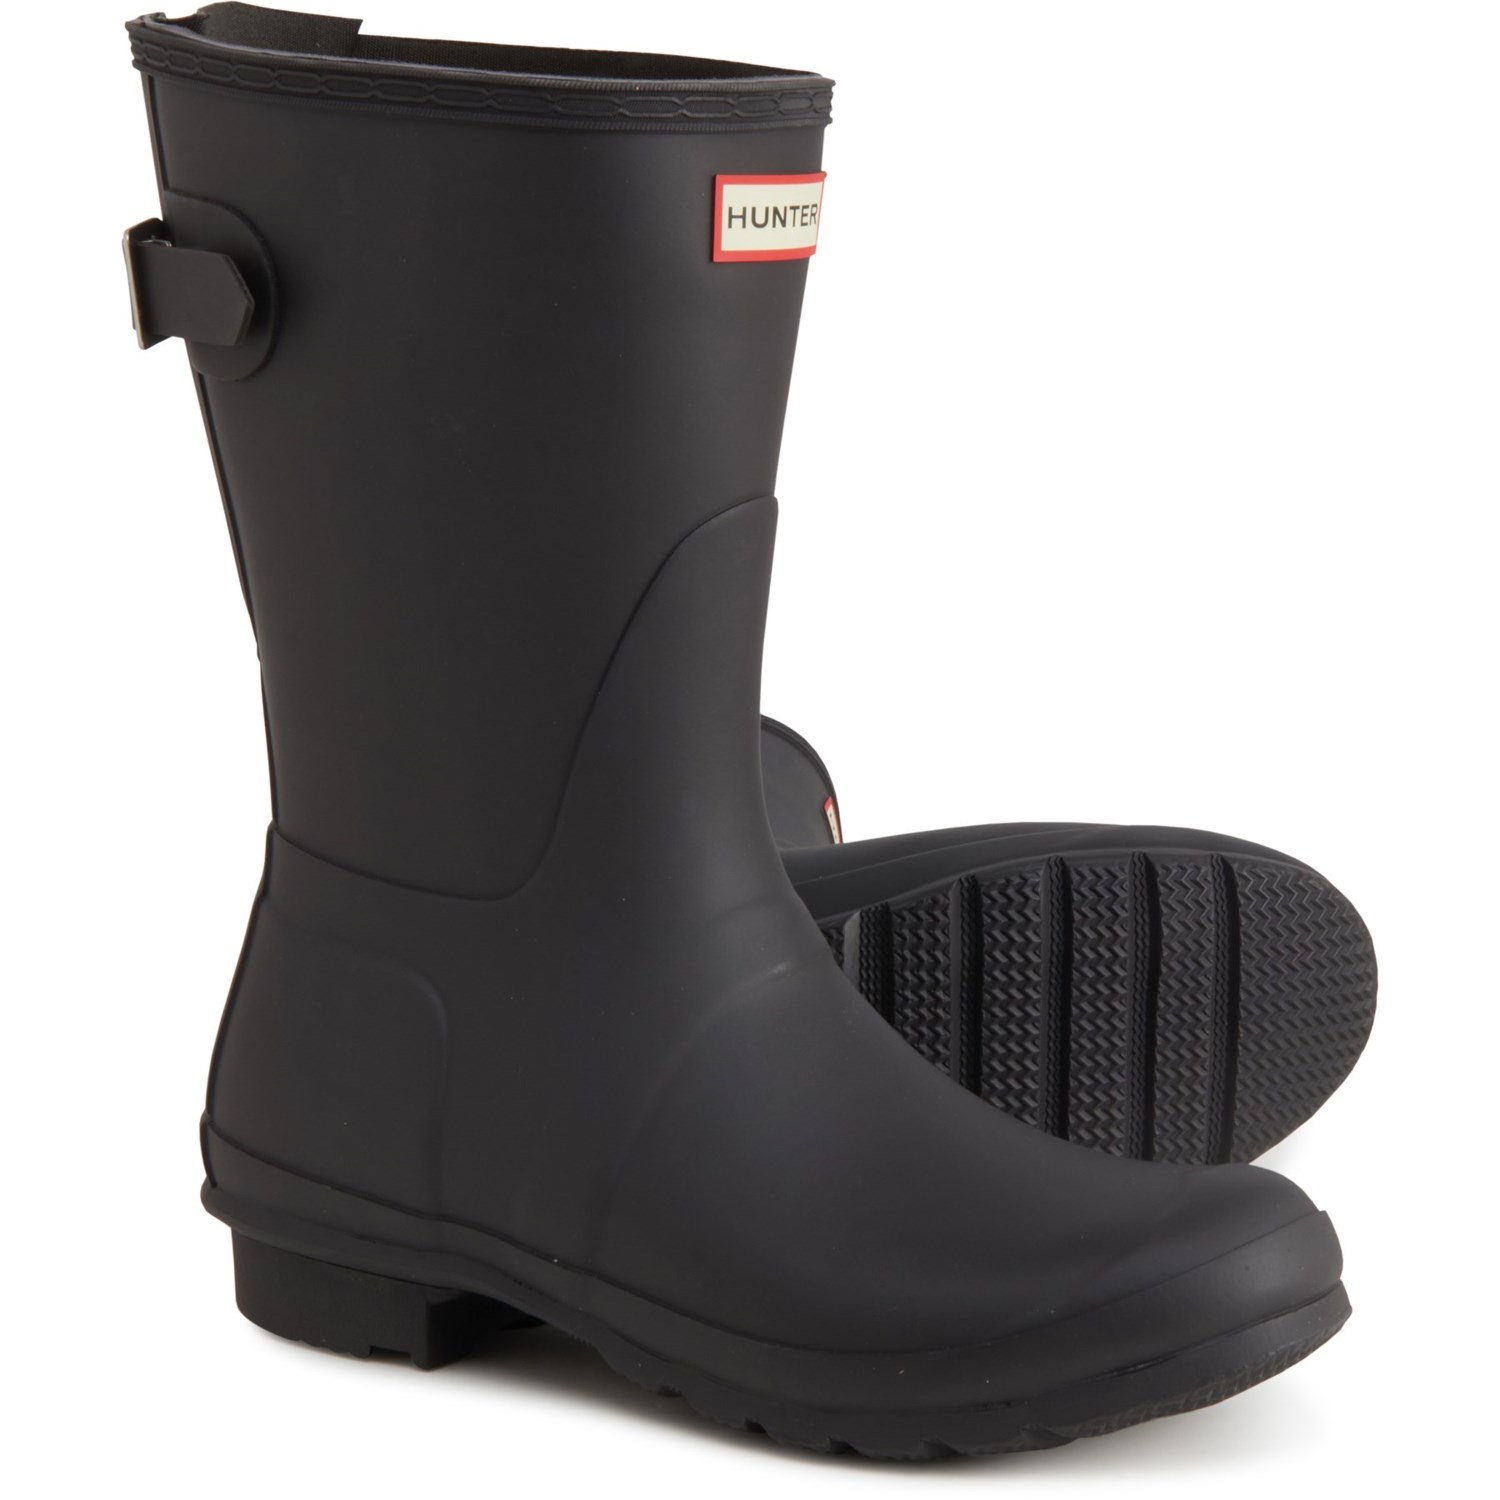 HUNTER Original Short Back-Adjustable Boots - Waterproof (For Women)